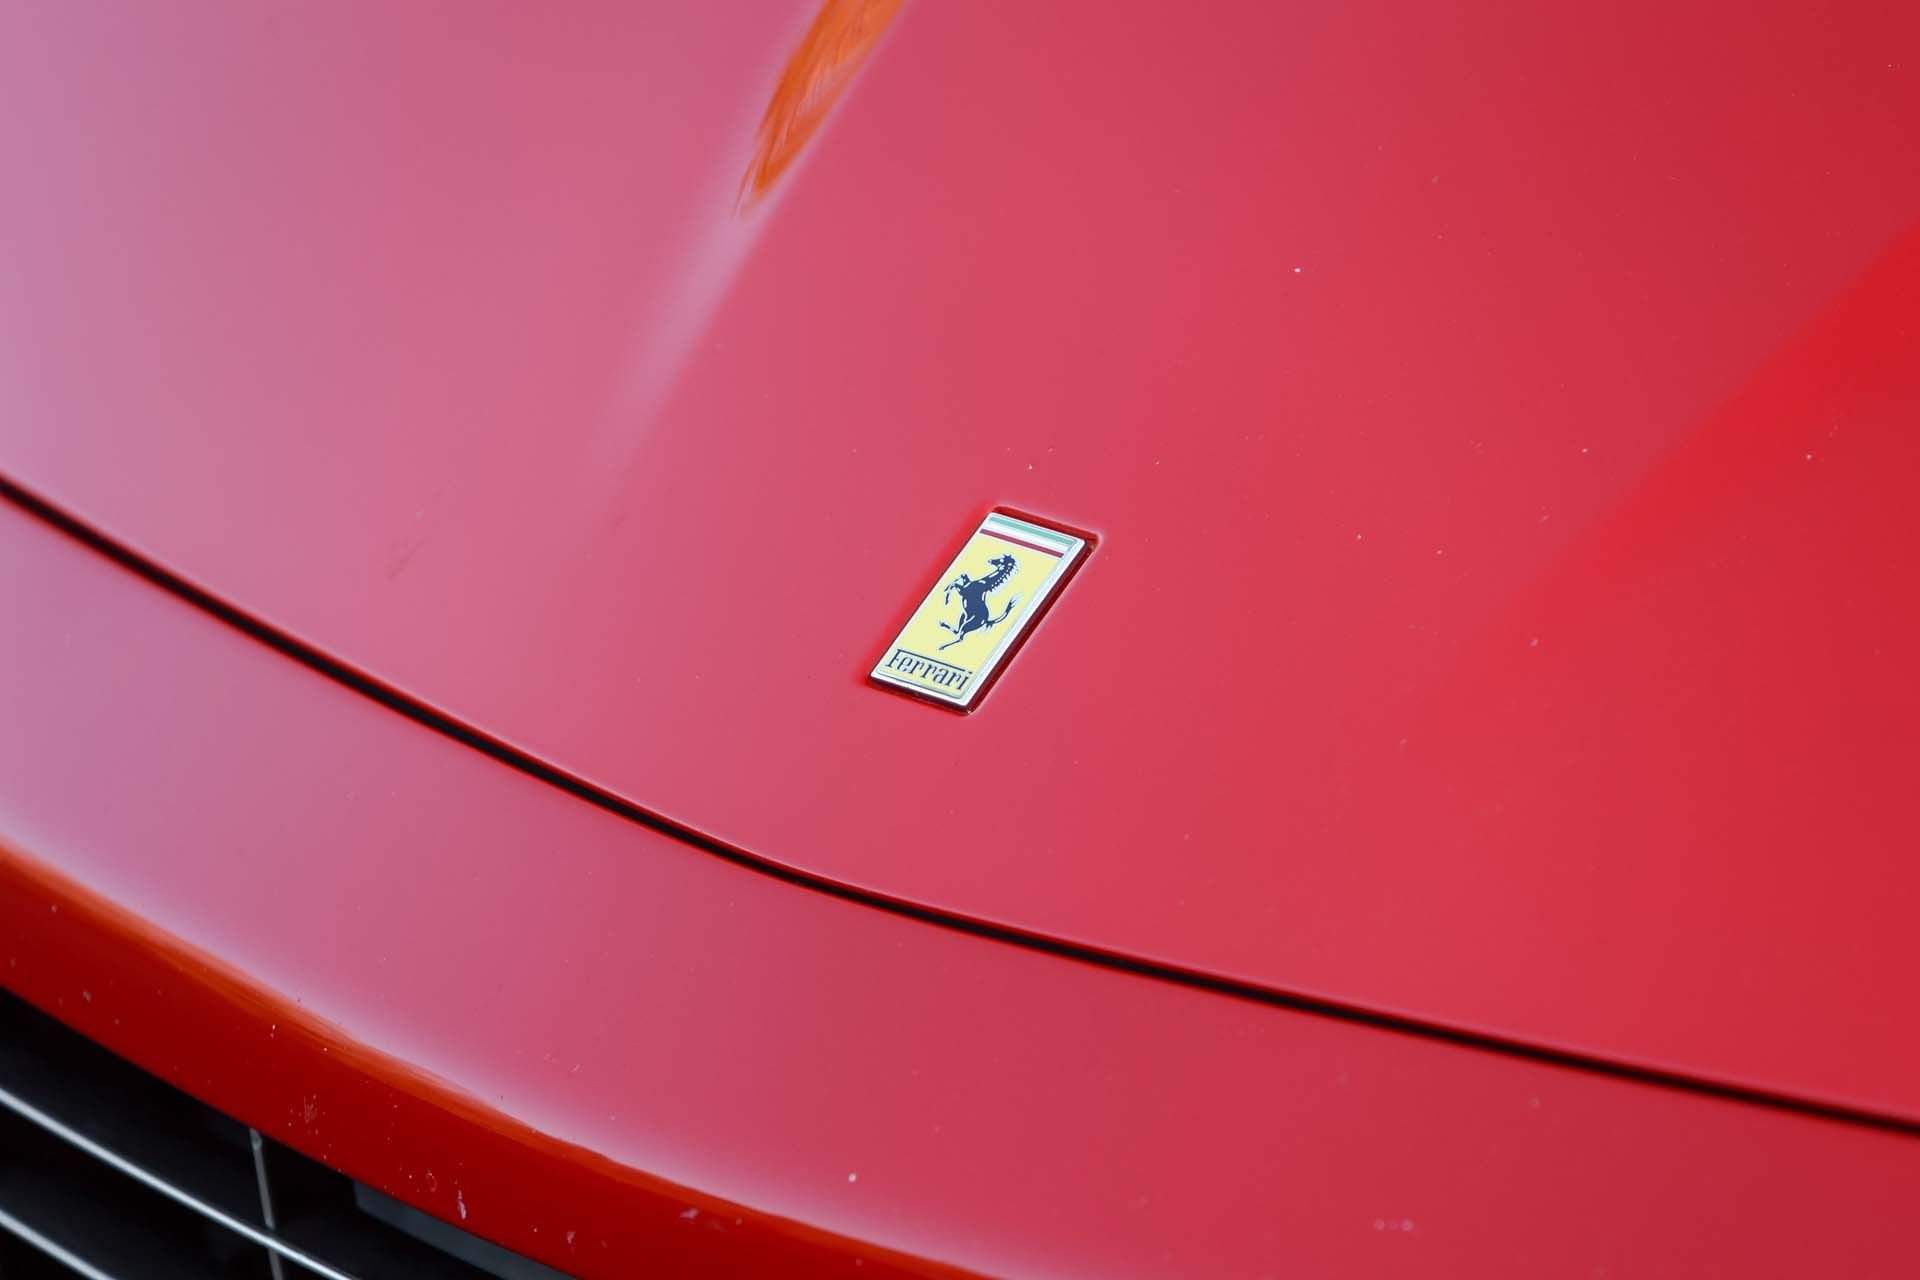 Broad Arrow Auctions | 2007 Ferrari 599 GTB Fiorano "Six-Speed Manual"